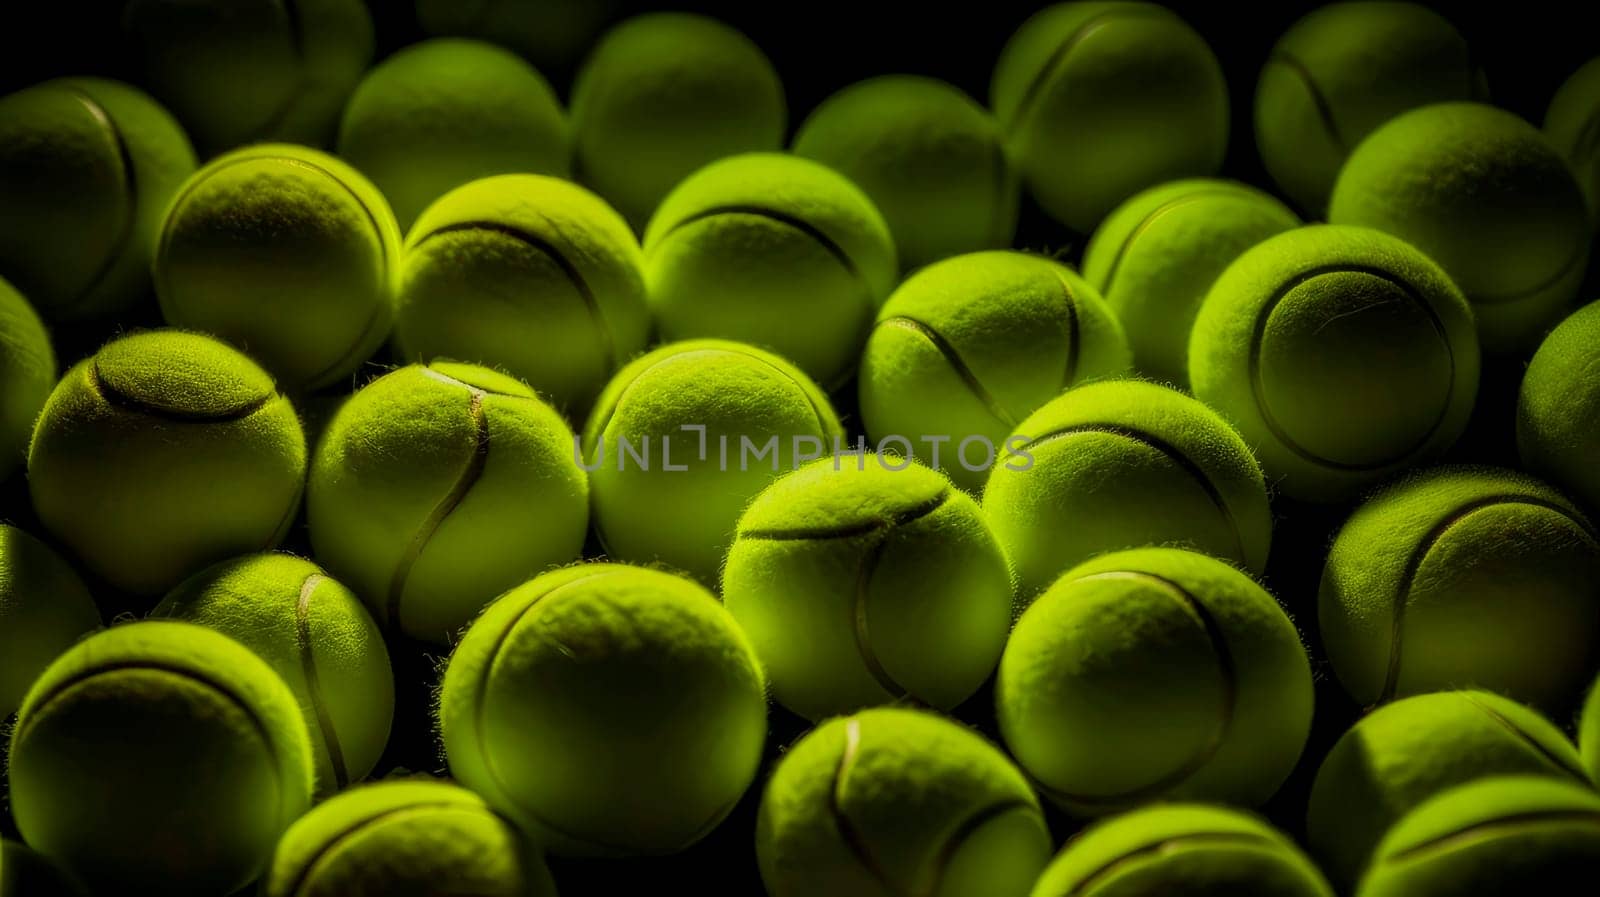 Lots of vibrant tennis balls, pattern of new tennis balls for background by Alla_Yurtayeva